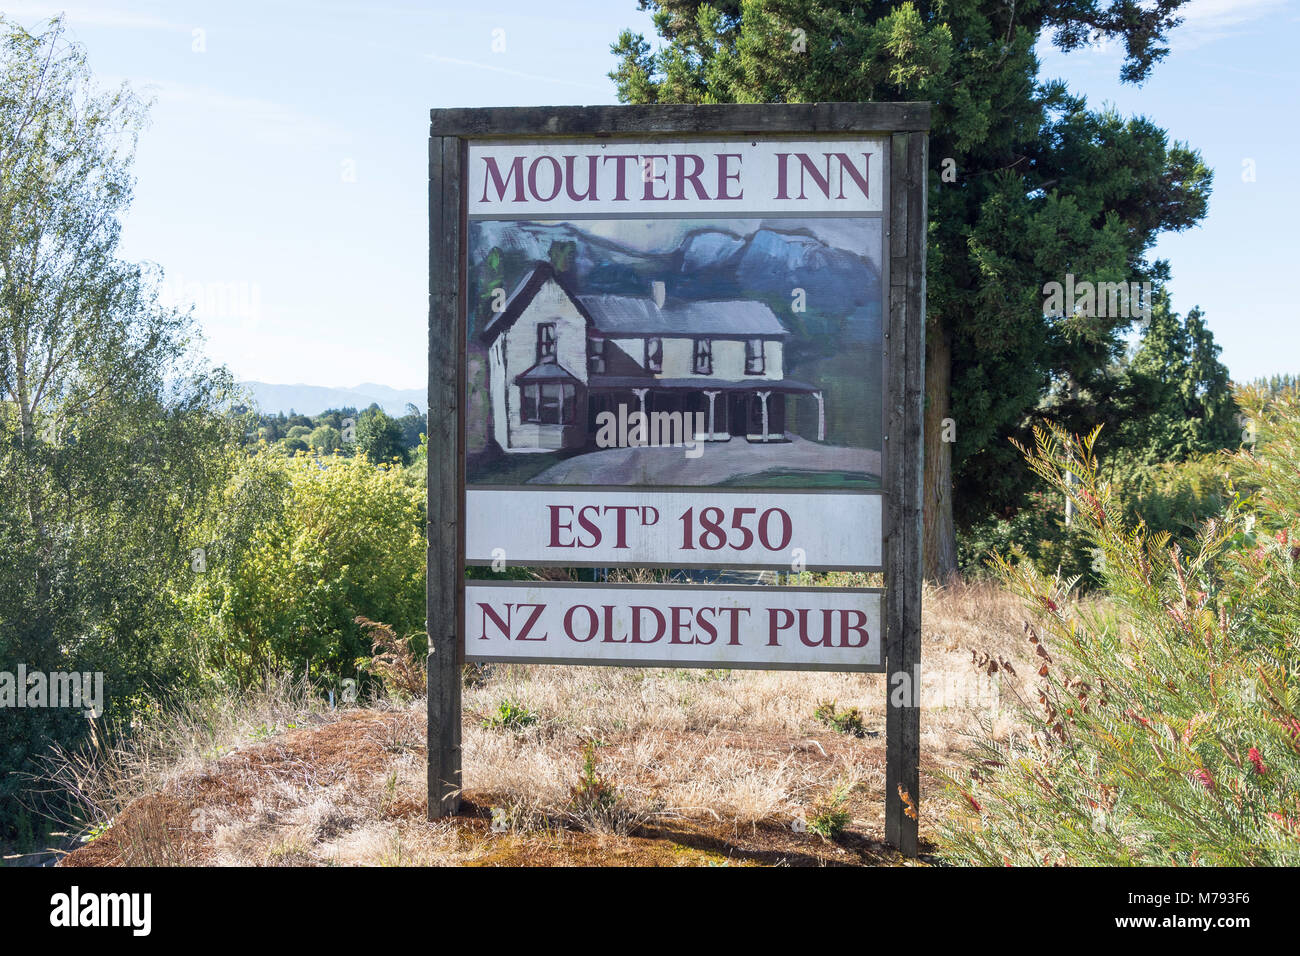 Moutere Inn (NZ oldest pub) sign, Moutere Highway, Upper Moutere, Tasman District, New Zealand Stock Photo